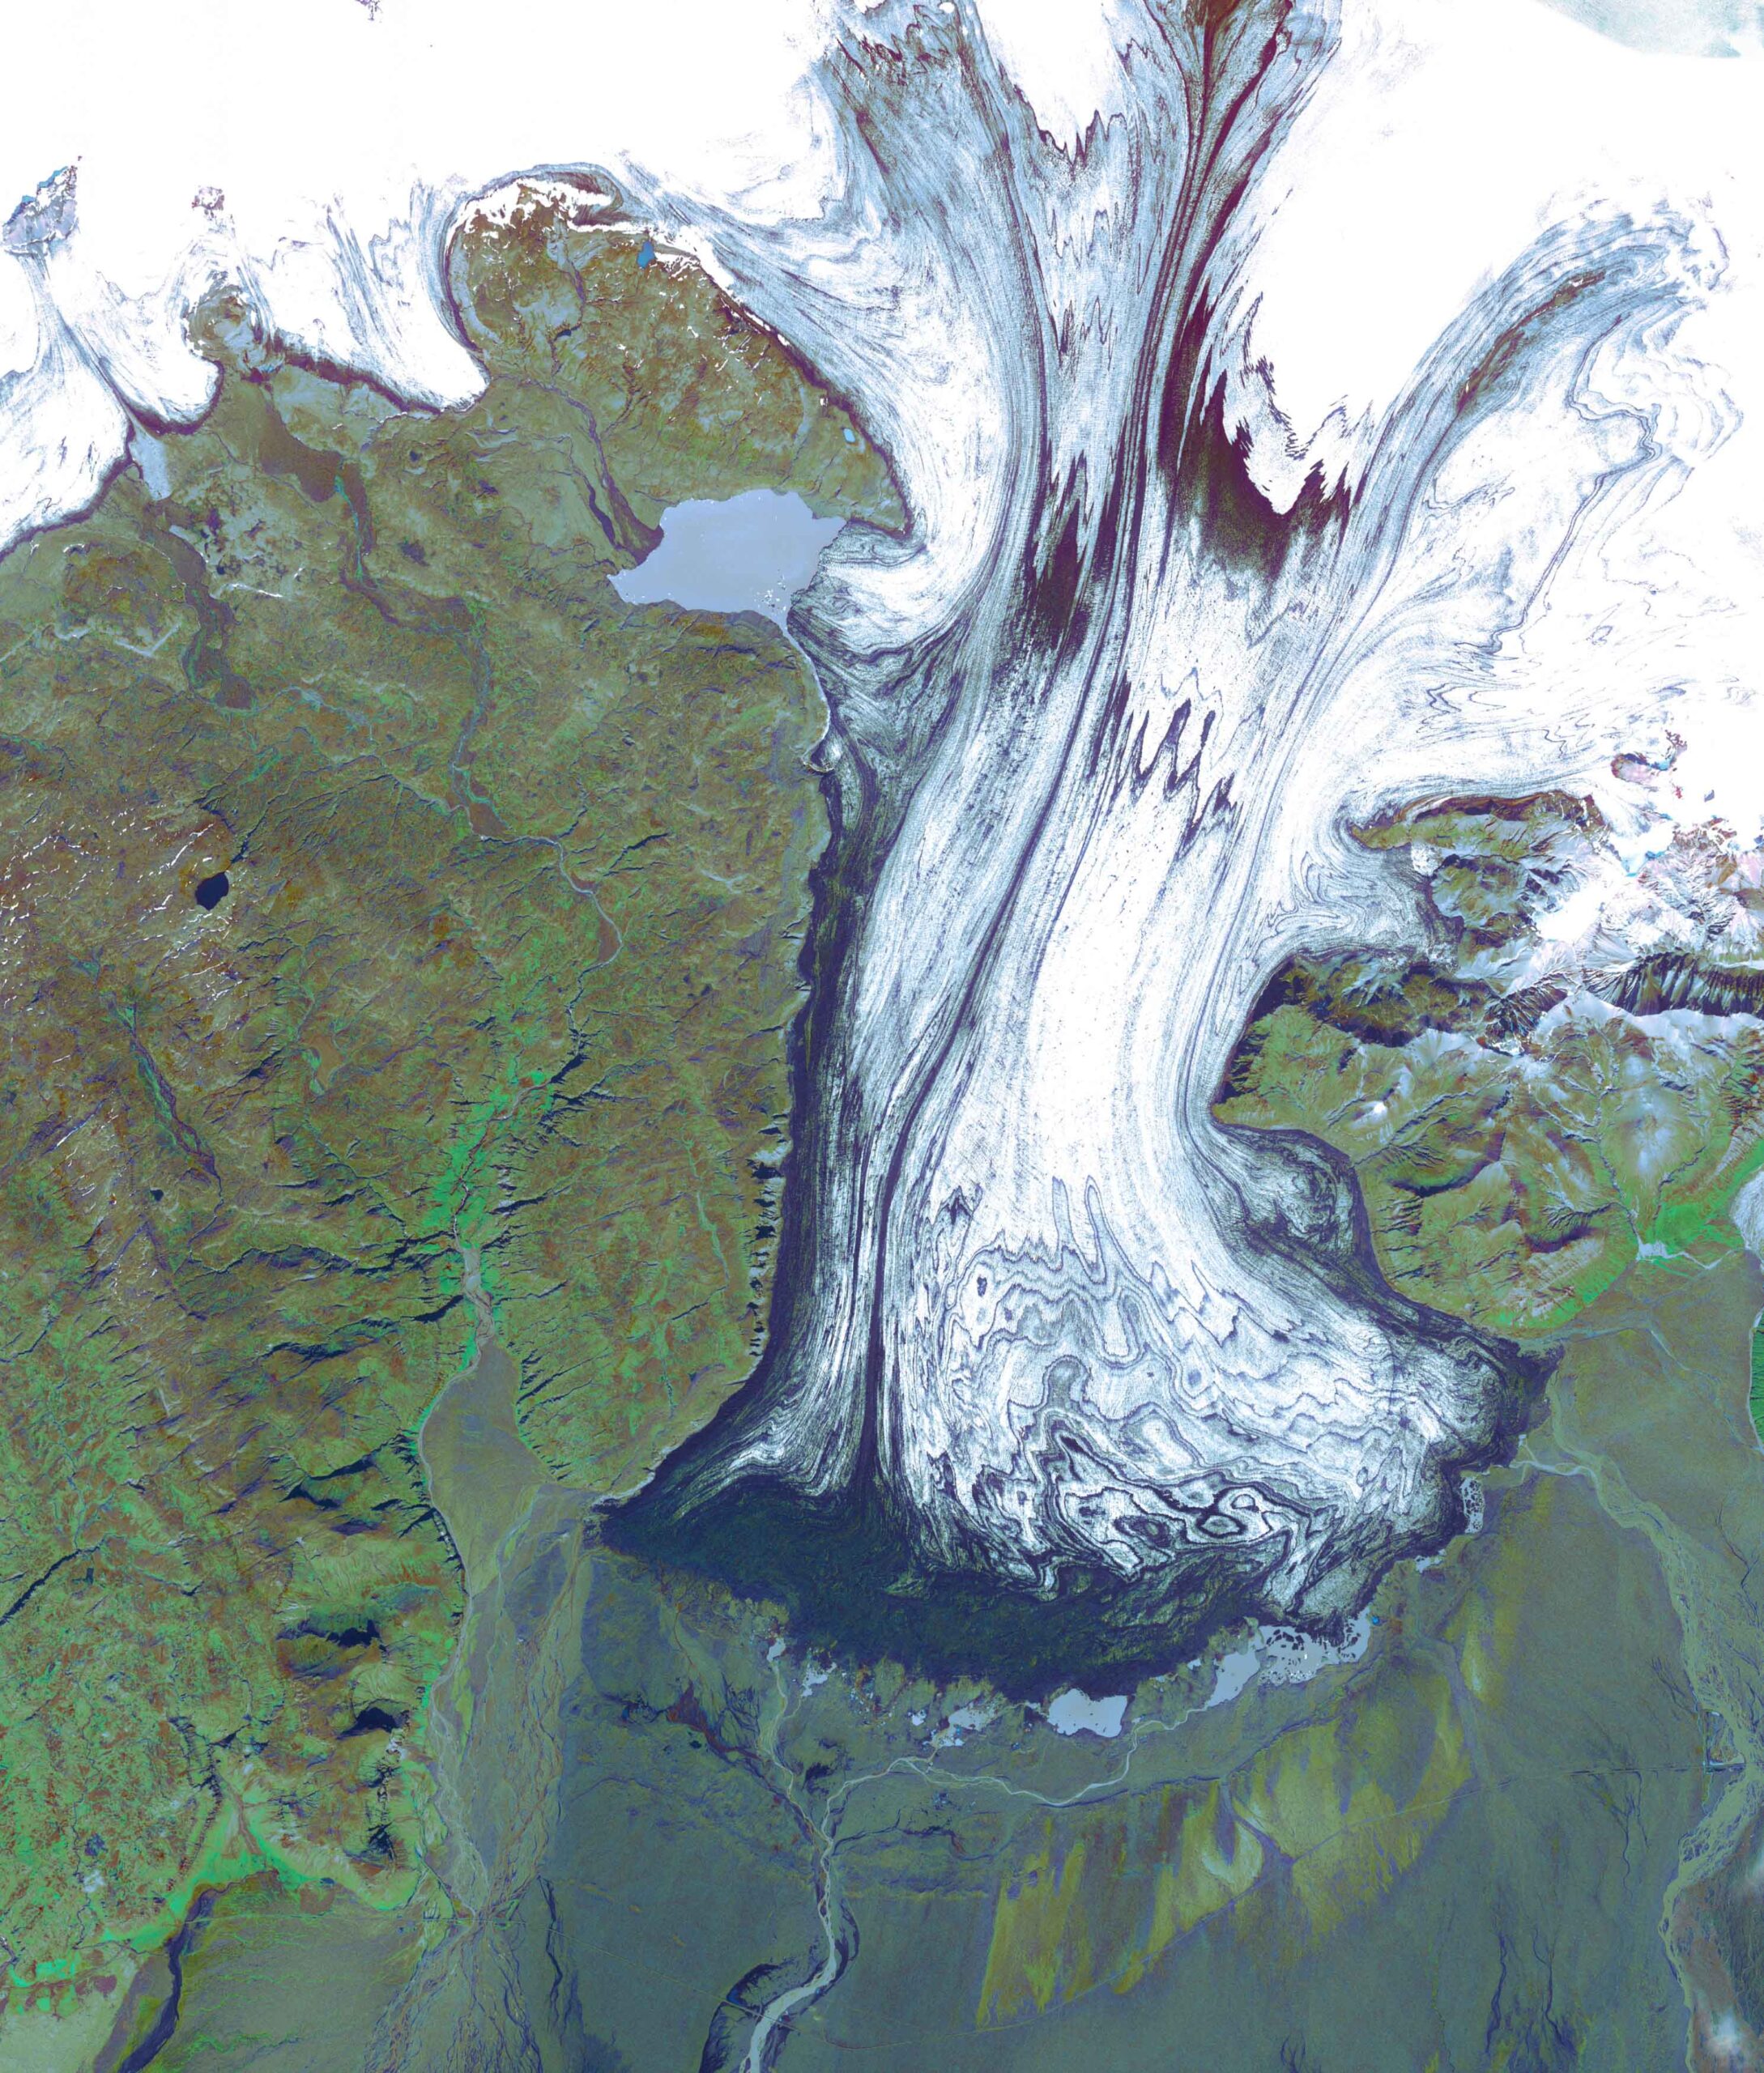 Satellietbeeld van de Skeiðarárjökull met midden bovenaan het Grænalón, circa 2002. Bron: Landmælinga Íslands.